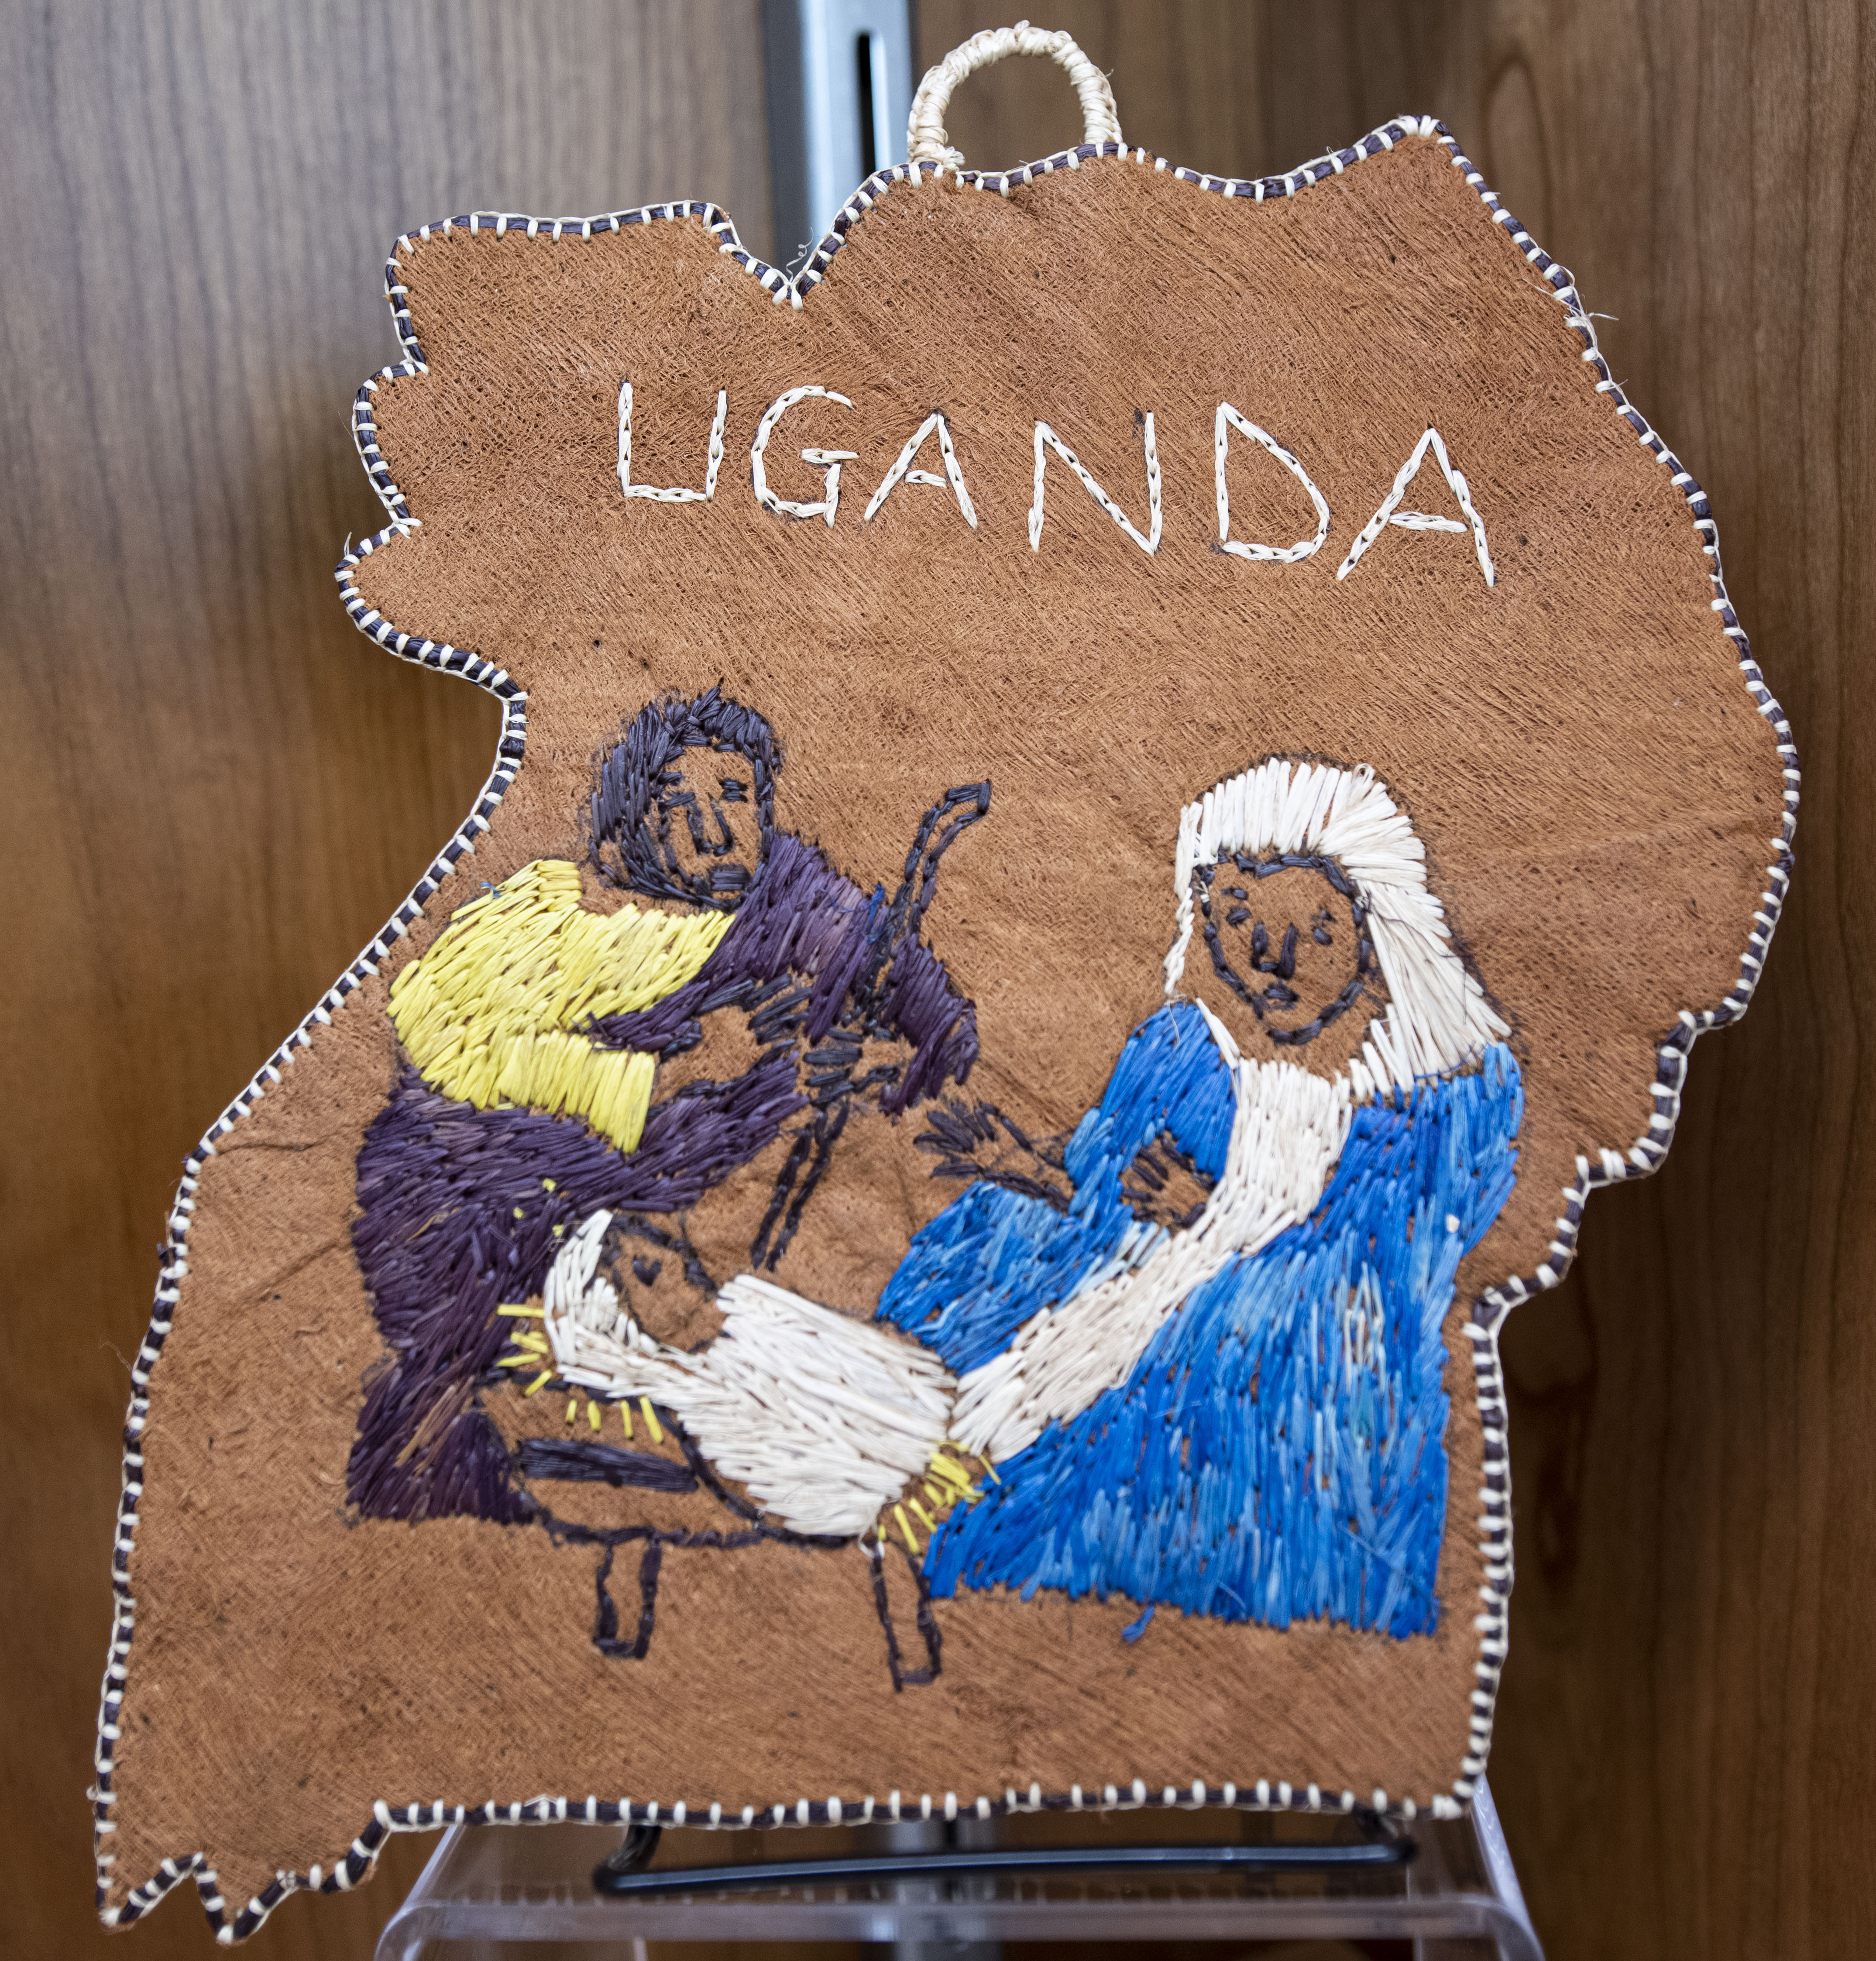 Uganda, leather, fibers